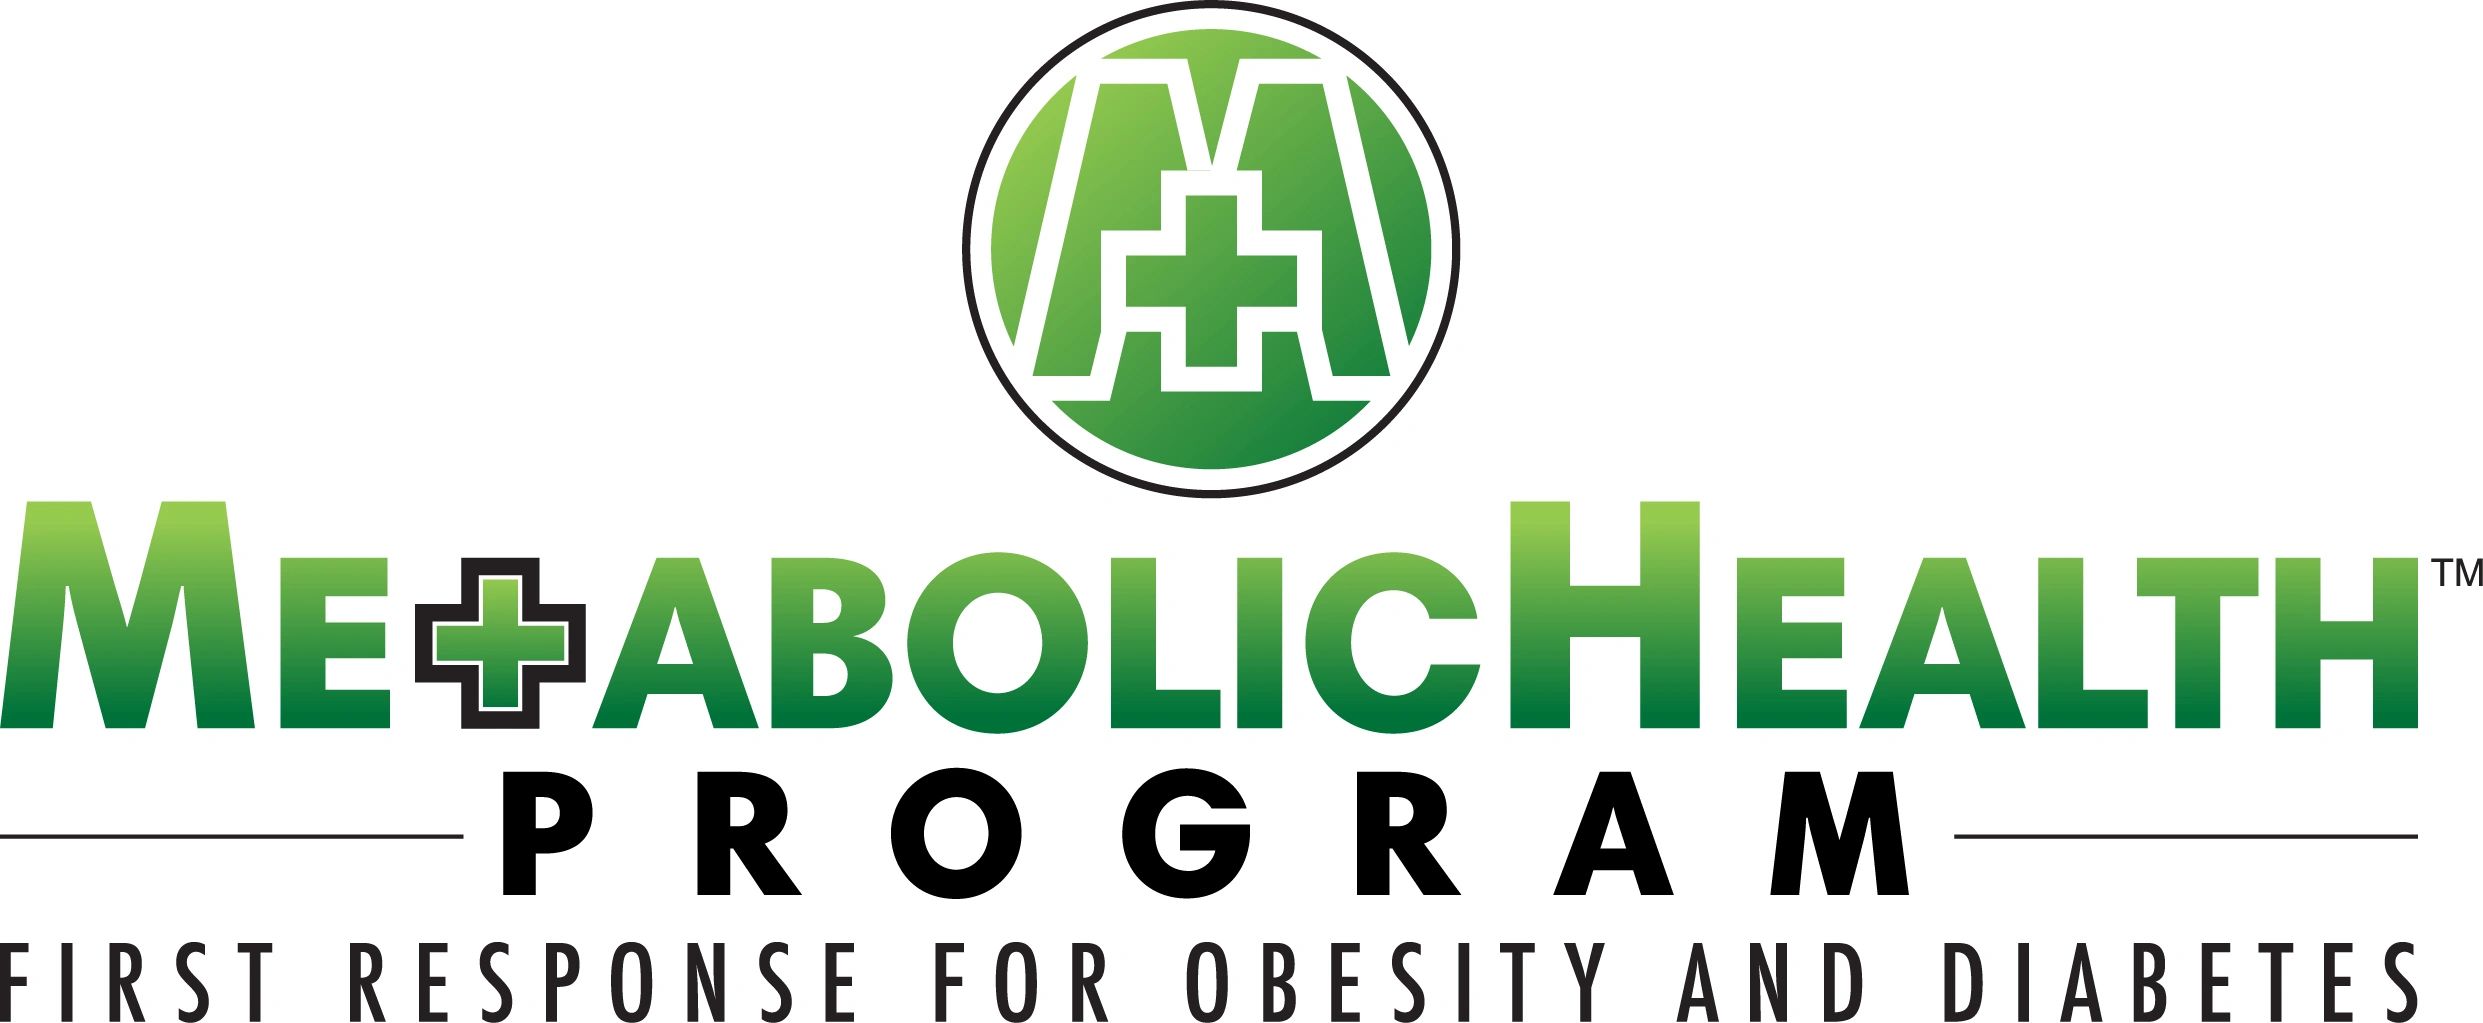 Metabolic health programs